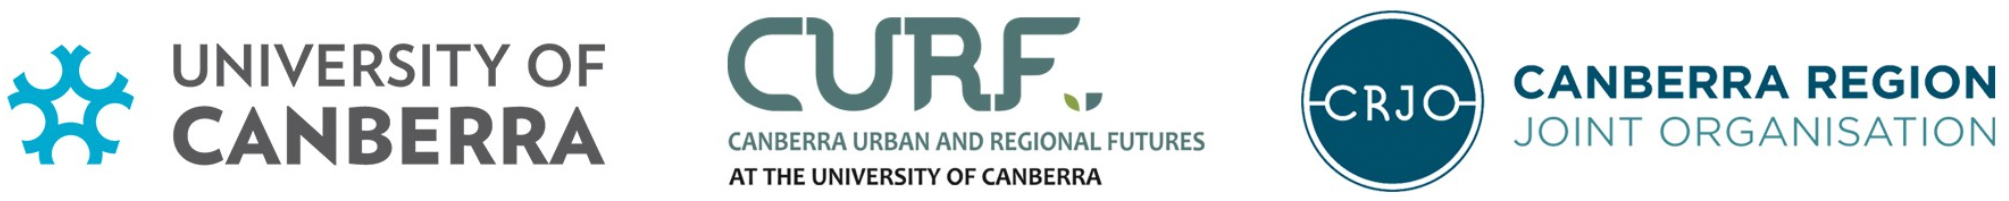 UC, CURF and Canberra Region logos